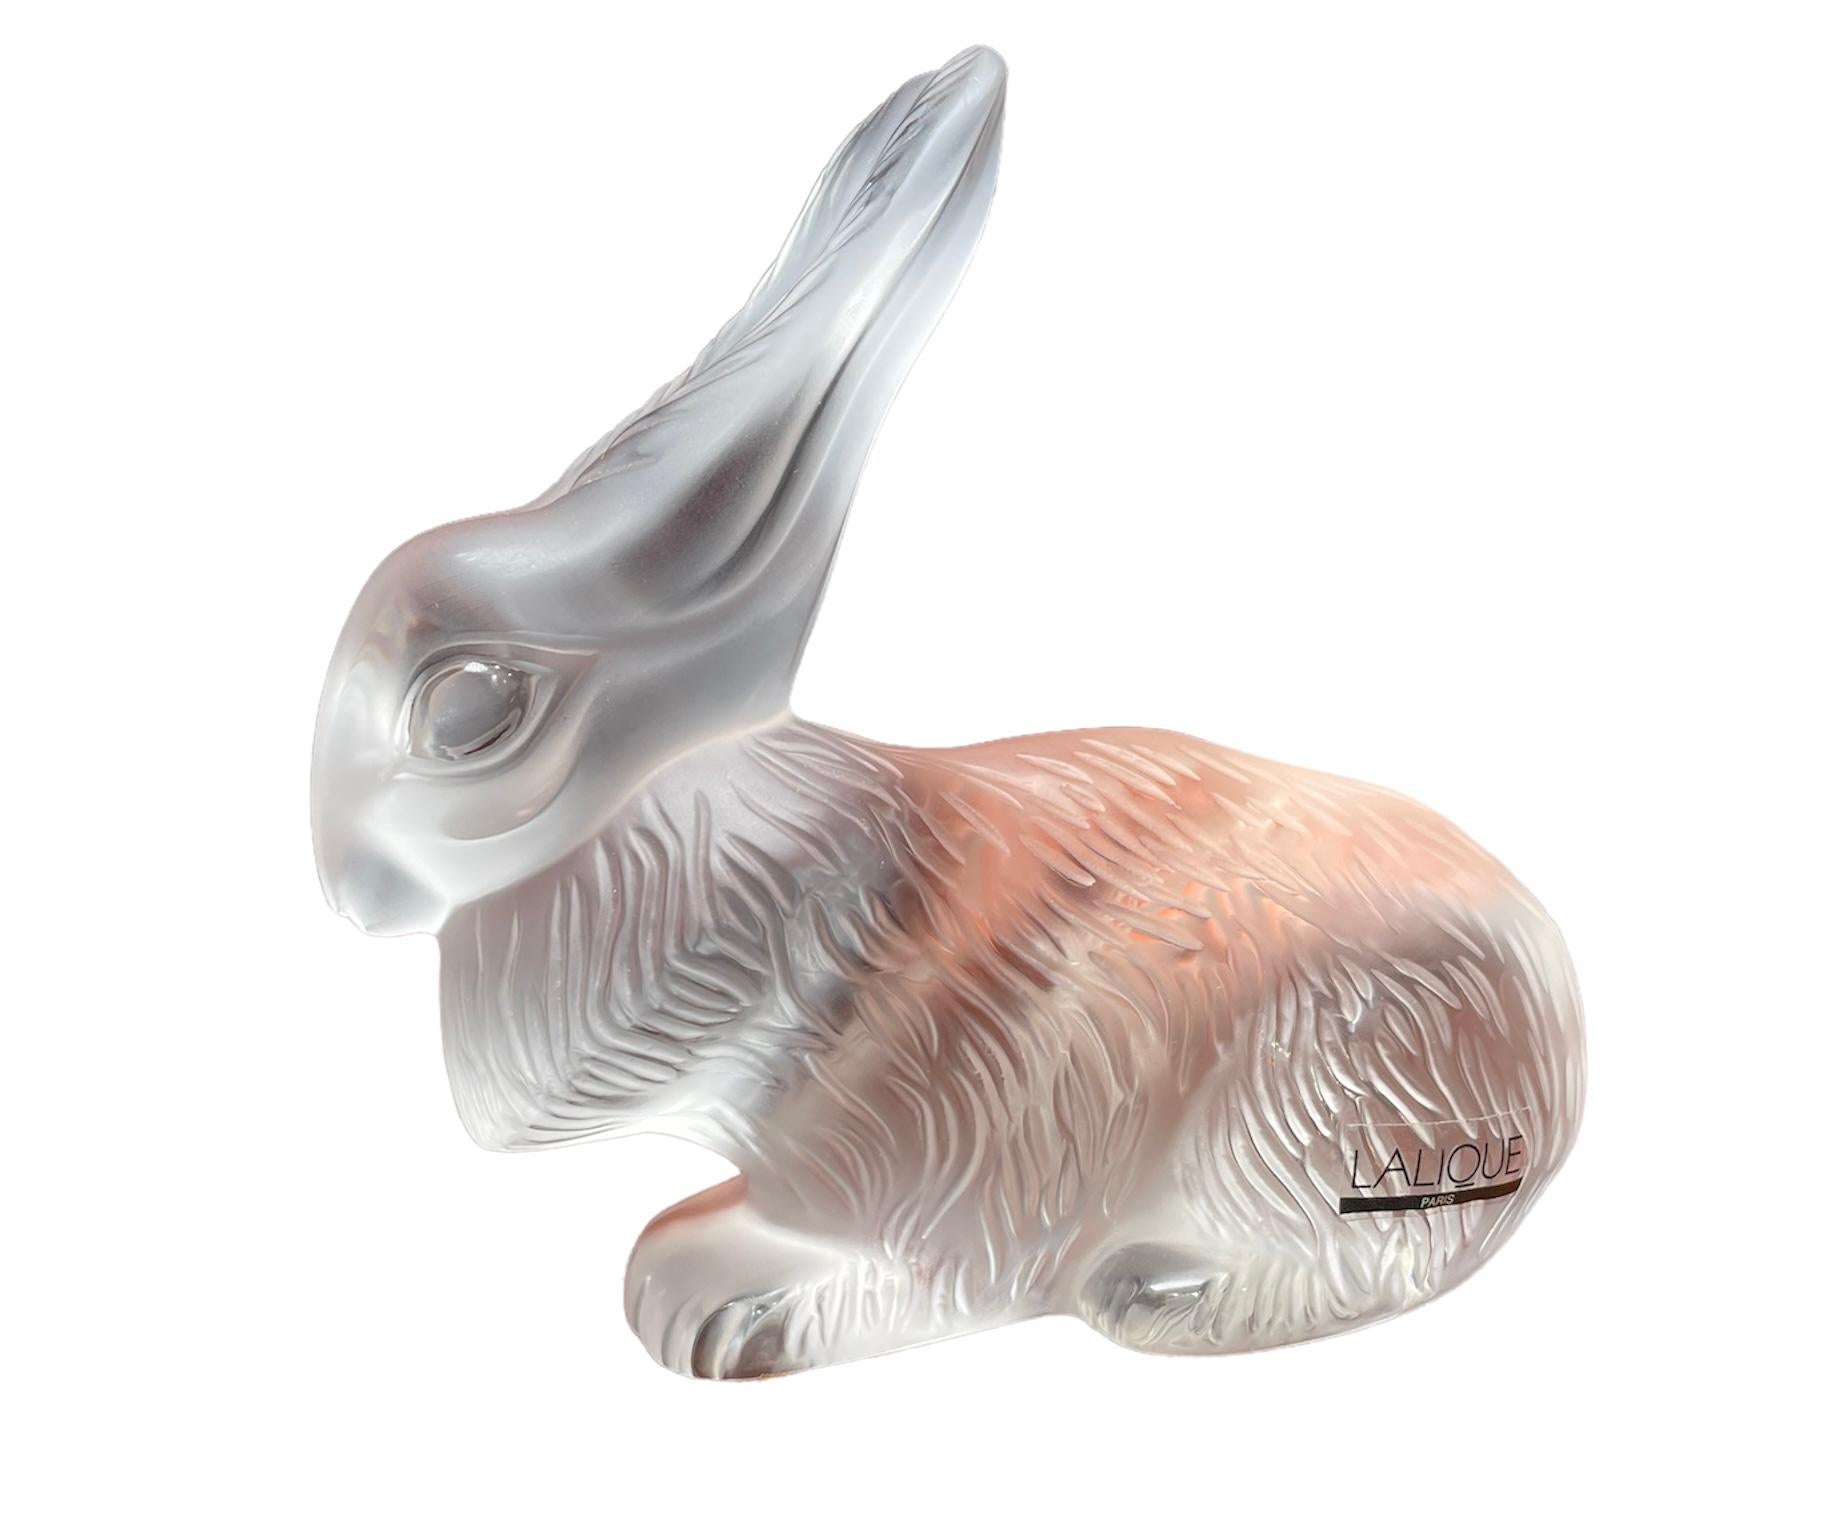 Molded Lalique France Crystal Rabbit ”Cesar” Figurine For Sale